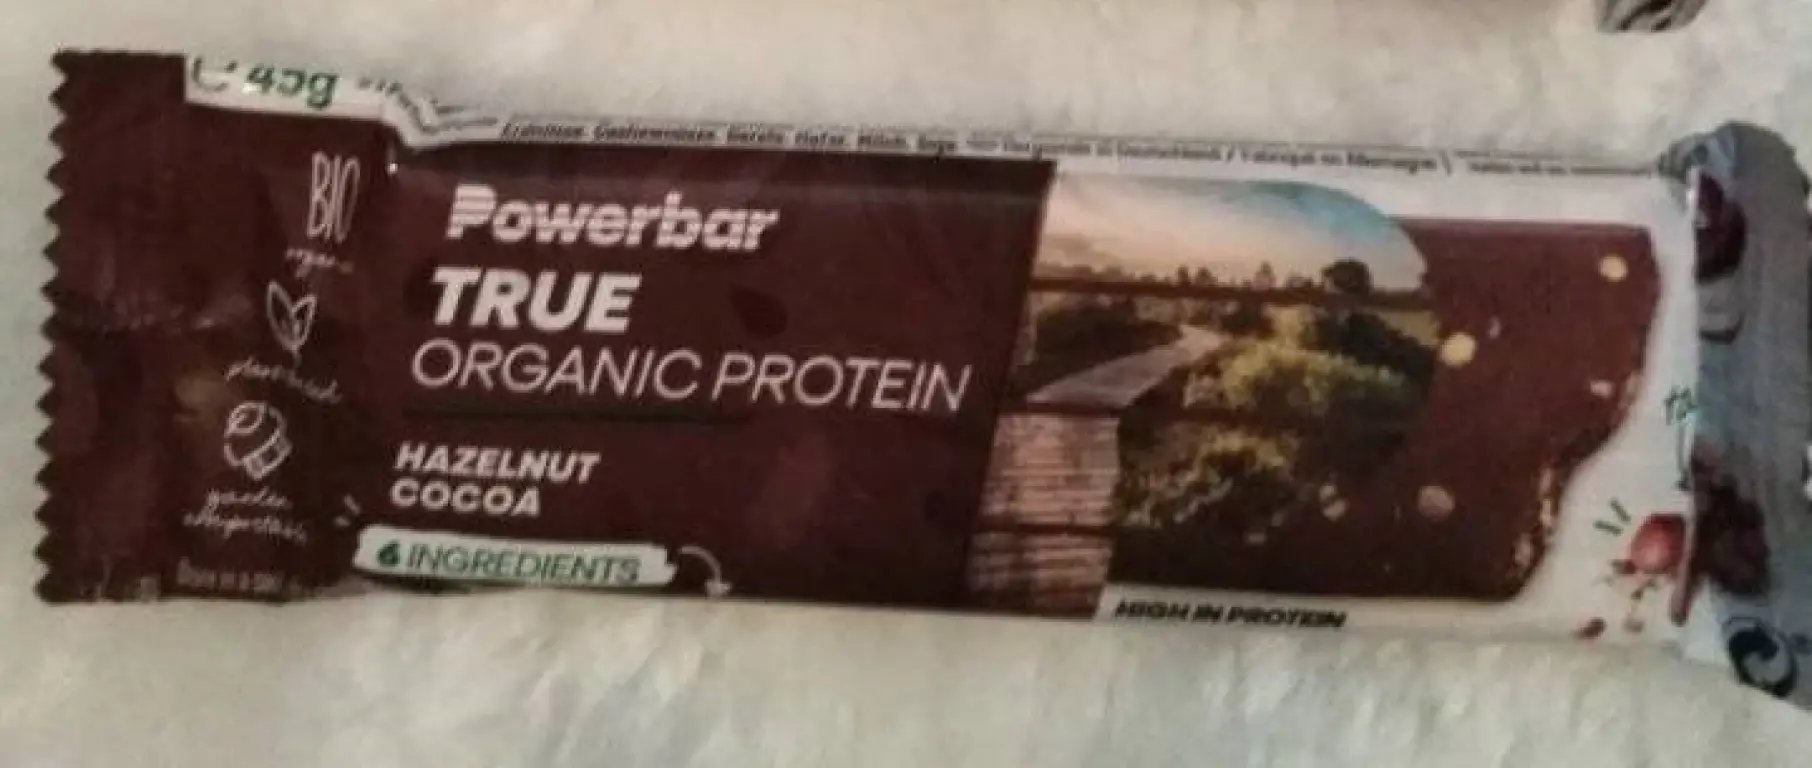 True Organic Protein Hazelnut Cocoa